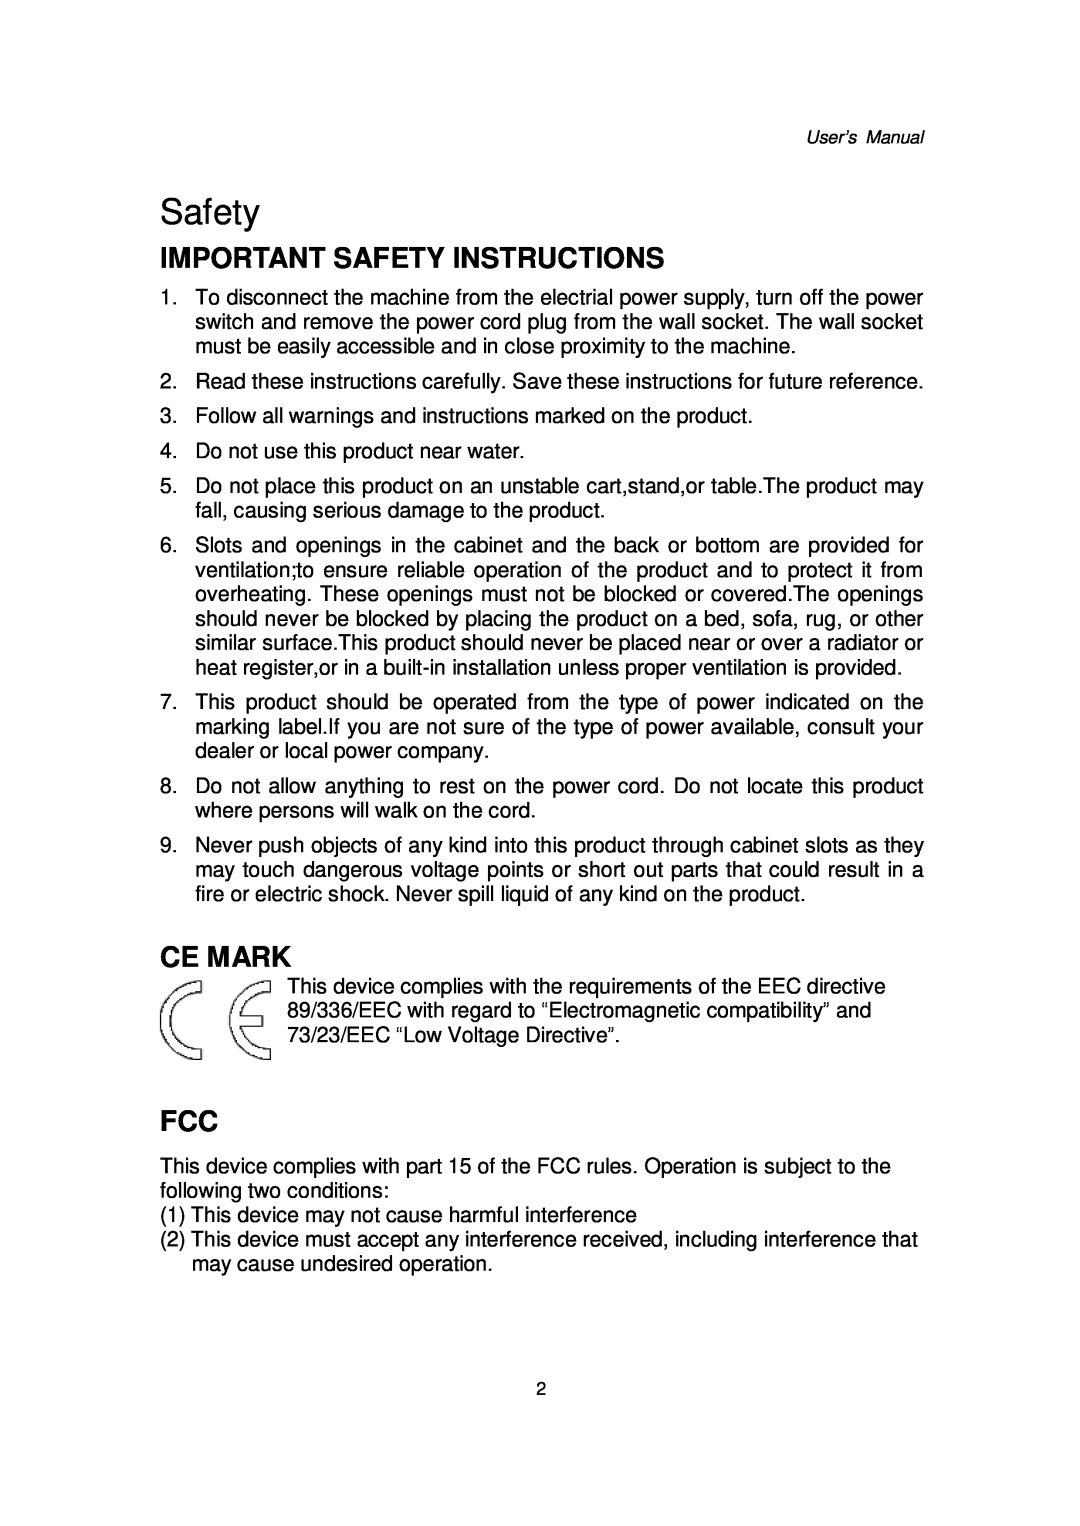 Intel 48201201, Kiosk Hardware System user manual Important Safety Instructions, Ce Mark 